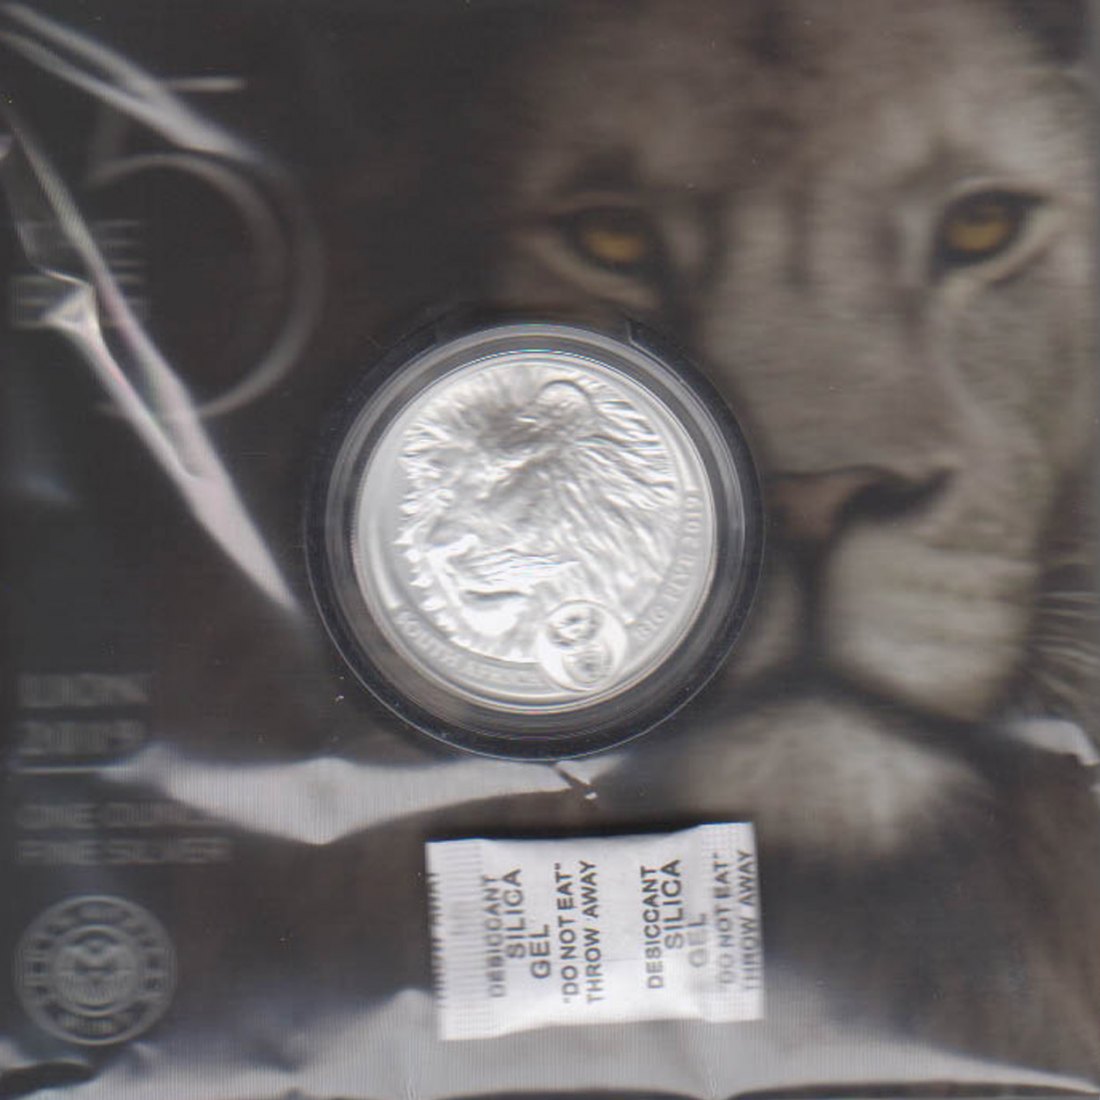  Südafrika 5 Rand Silbermünze *Big Five - Löwe* 2019 1oz Silber nur 15.000St!   